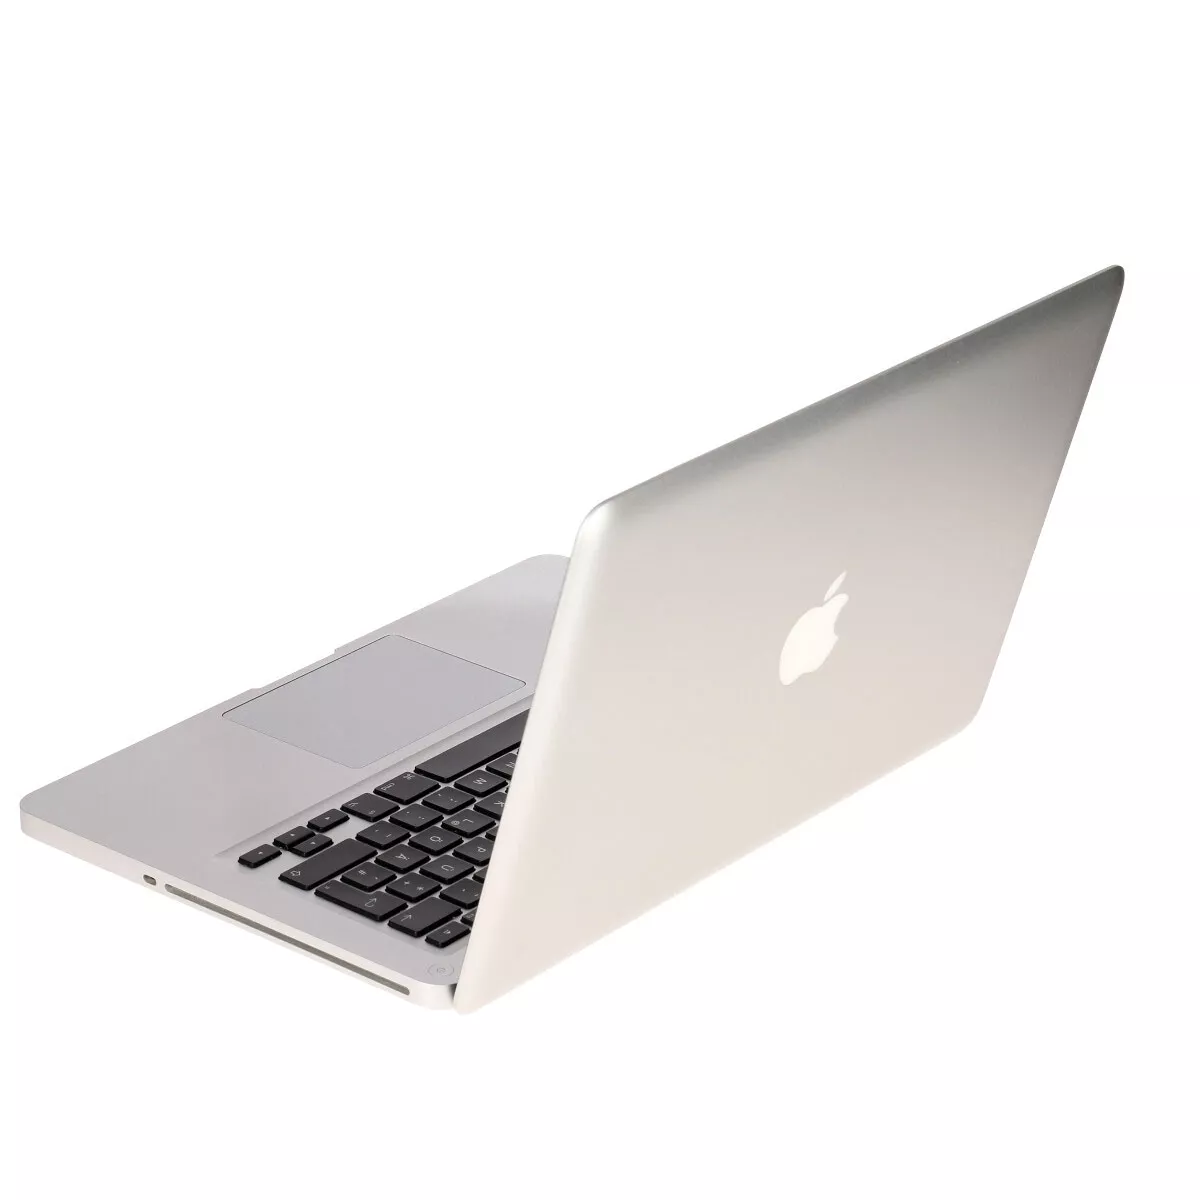 Apple MacBook Pro A1278 Core i5 2415M 2,3 GHz 4 GB 320 GB Webcam